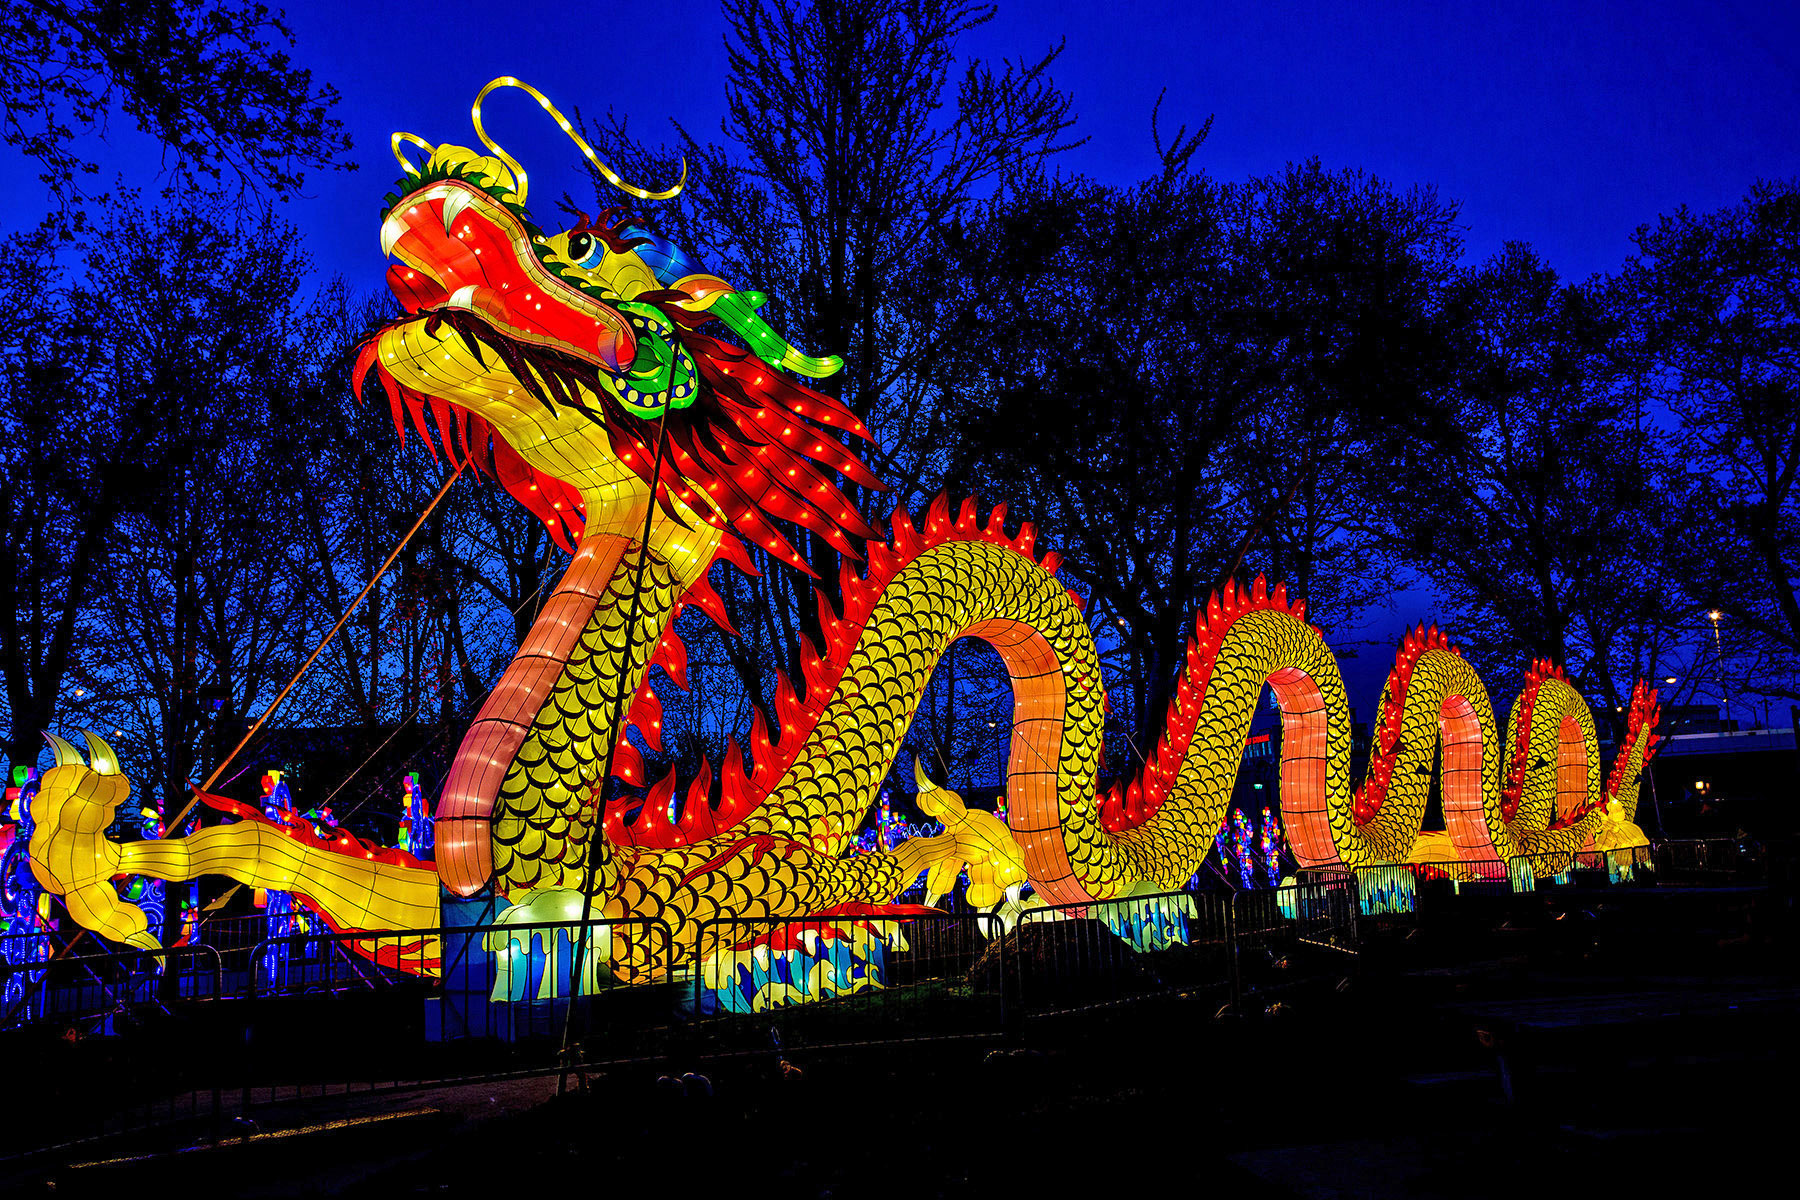 Chinese Lantern Festival returns to Boerner Botanical Gardens